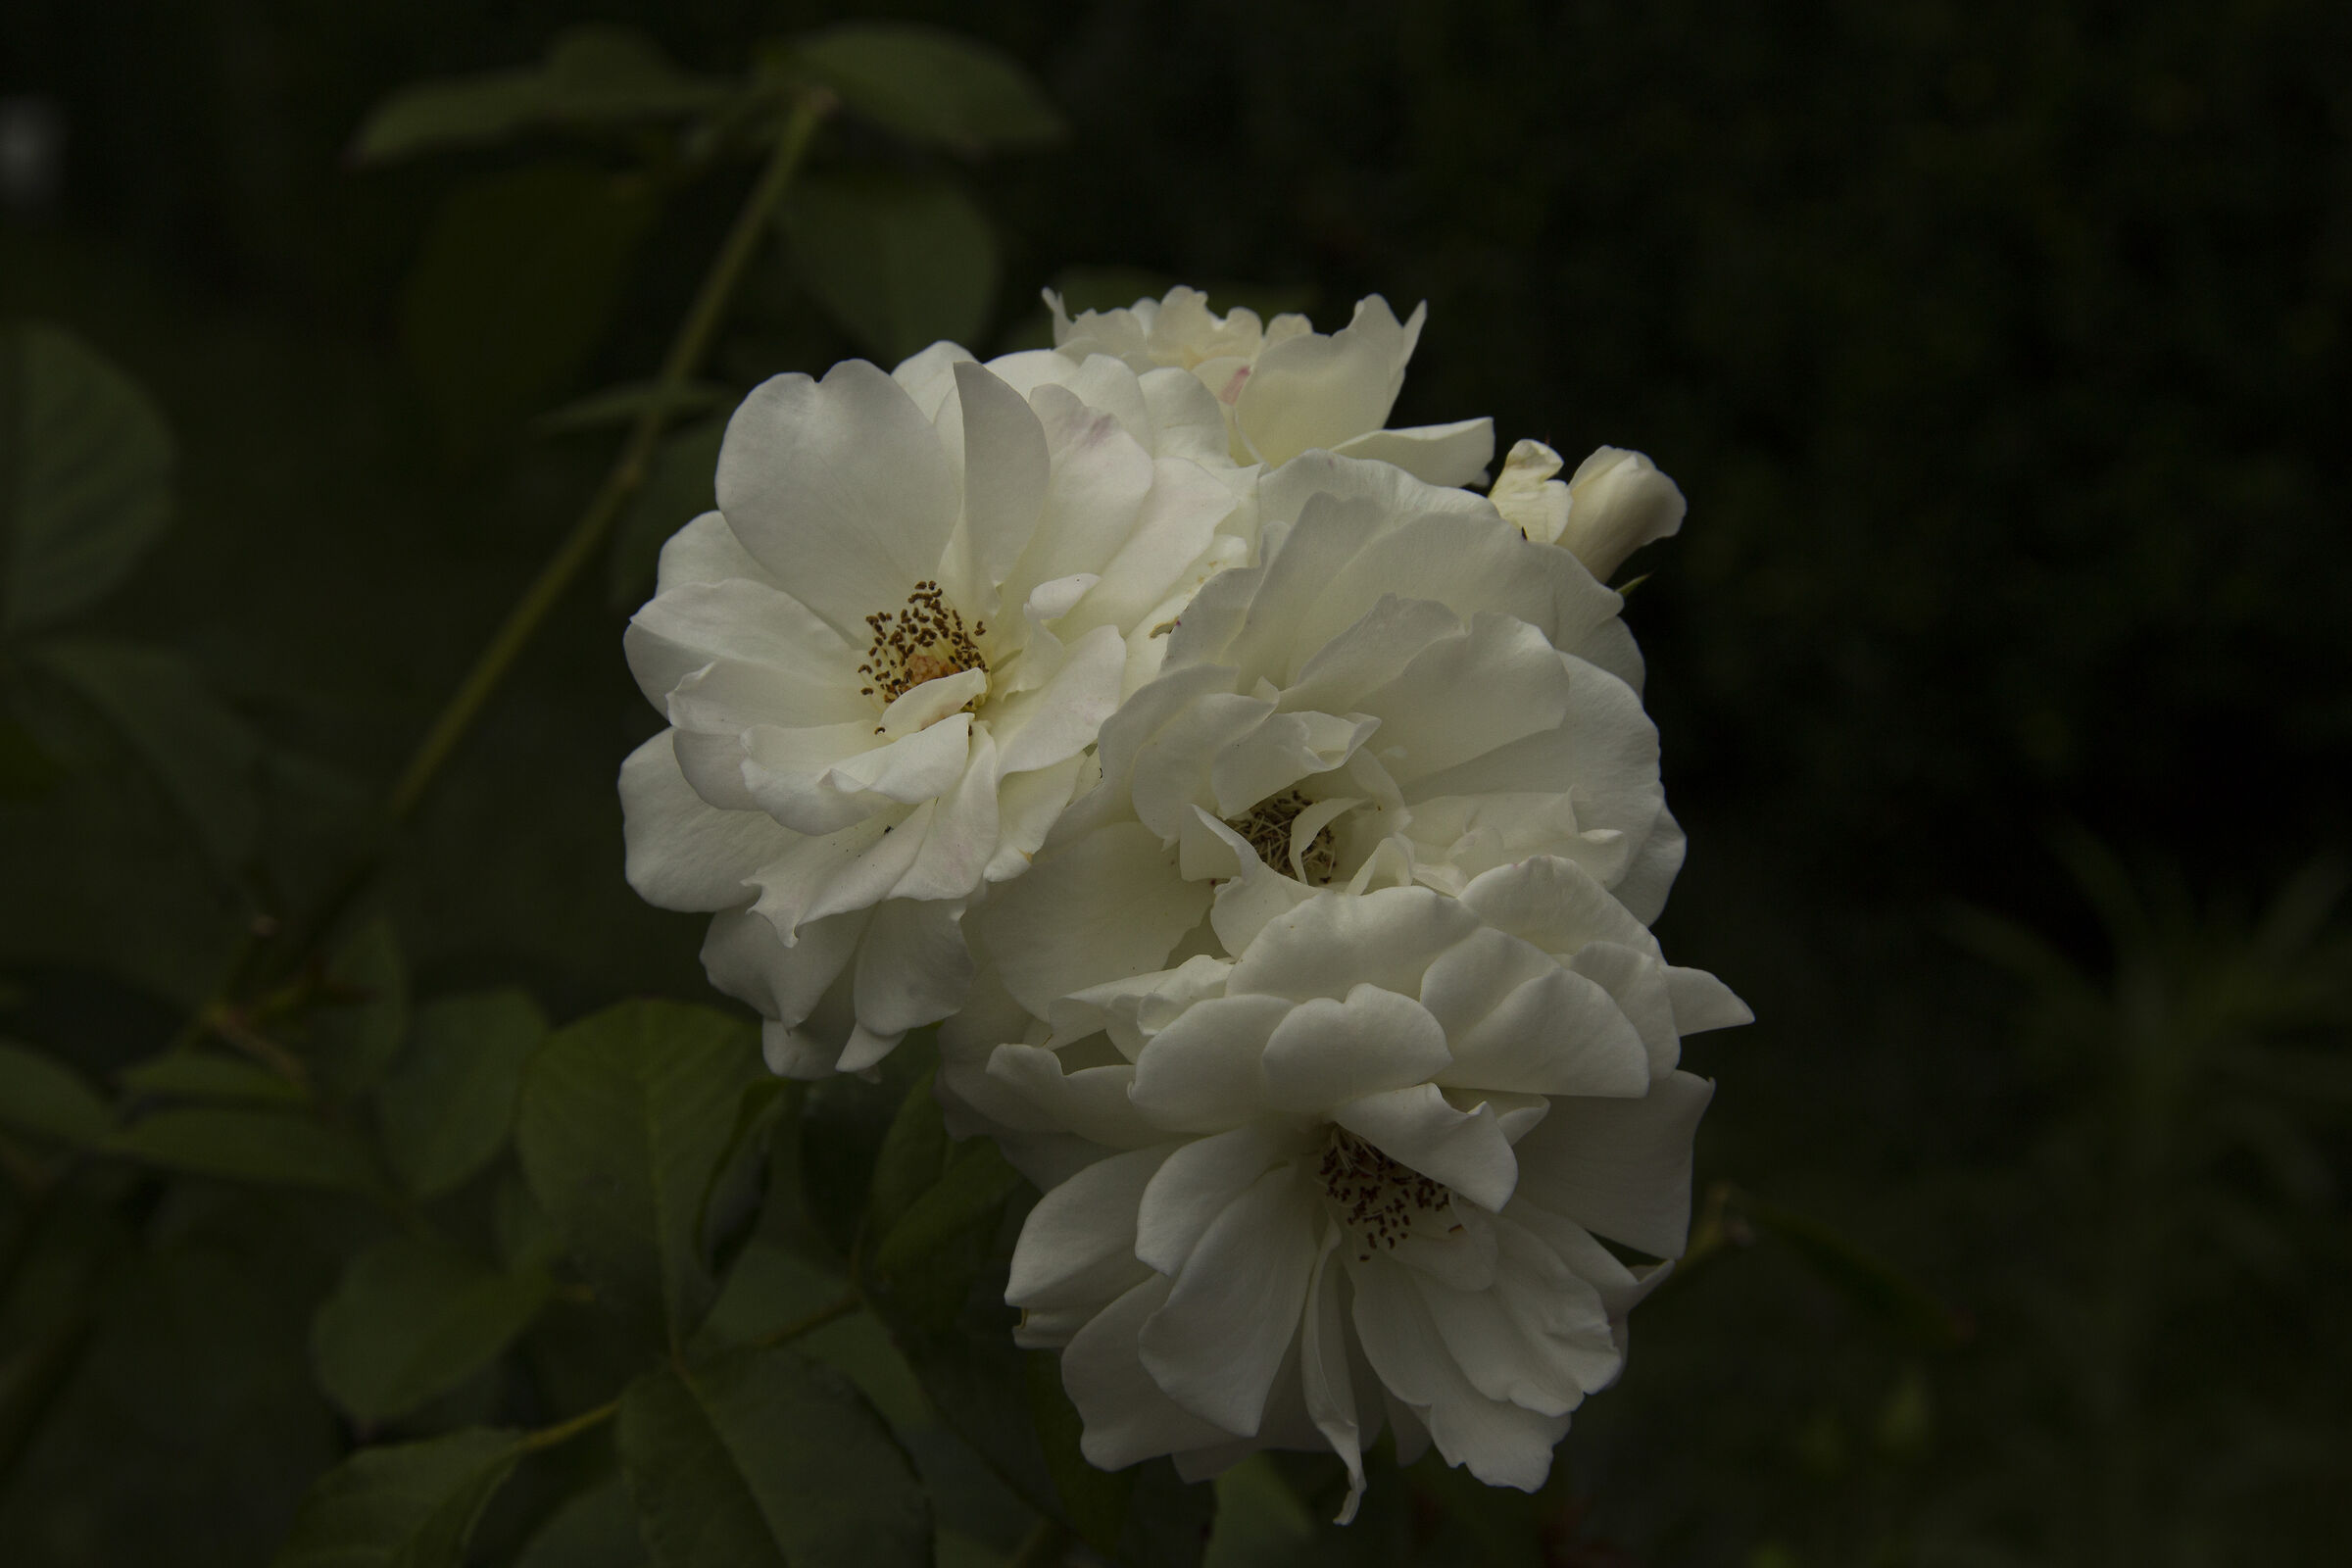 White Roses under display...